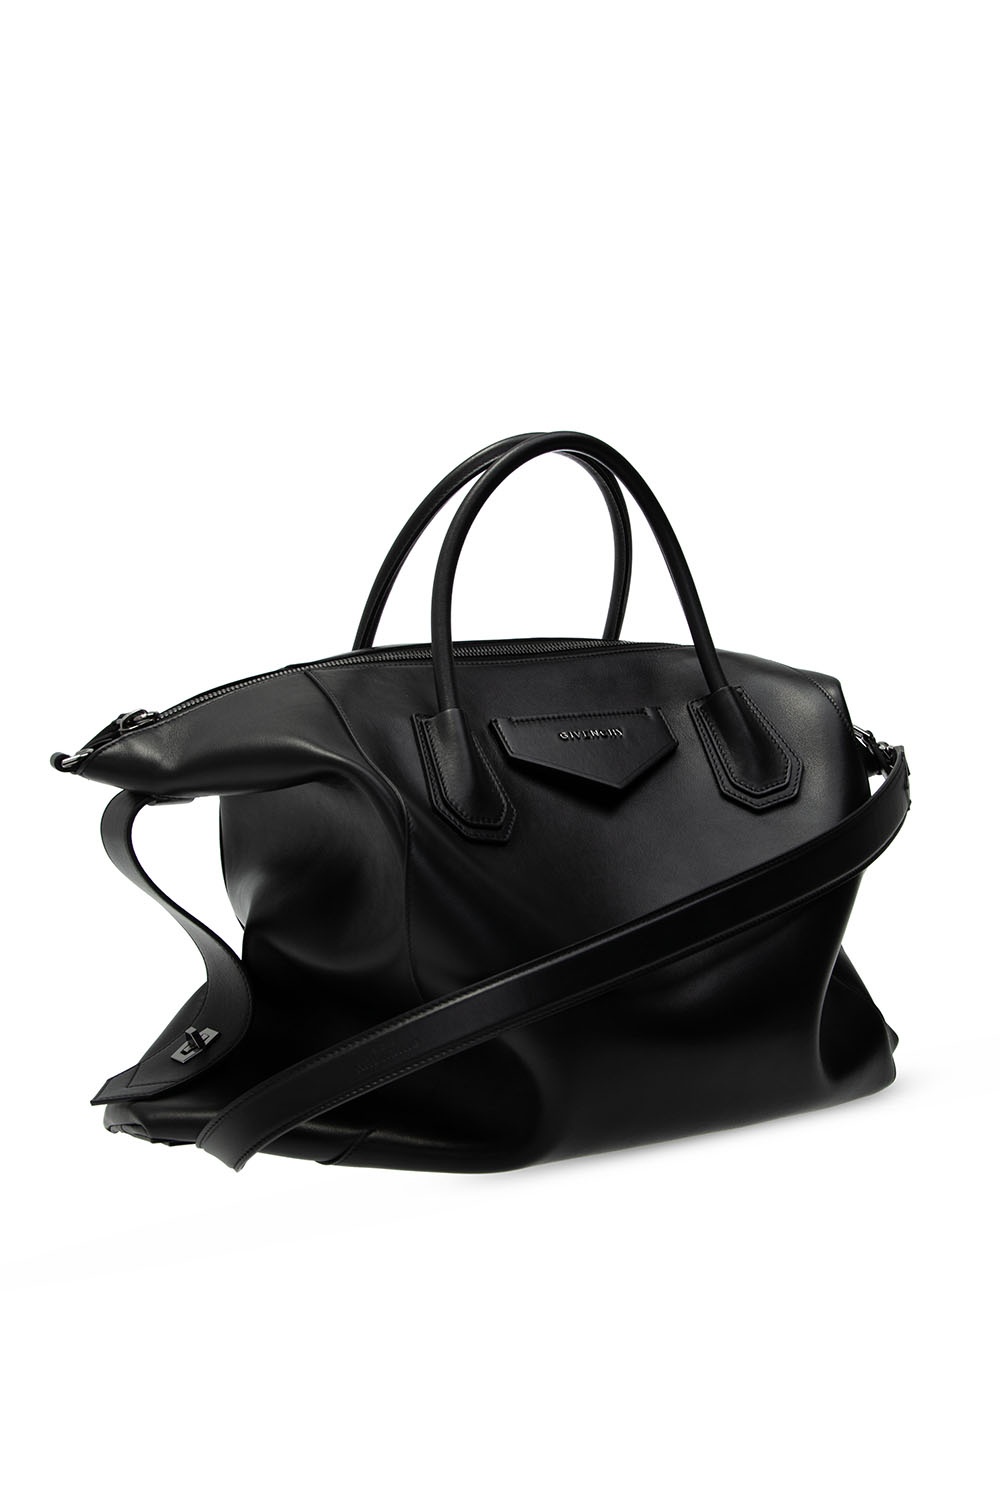 Antigona' duffle bag Givenchy 